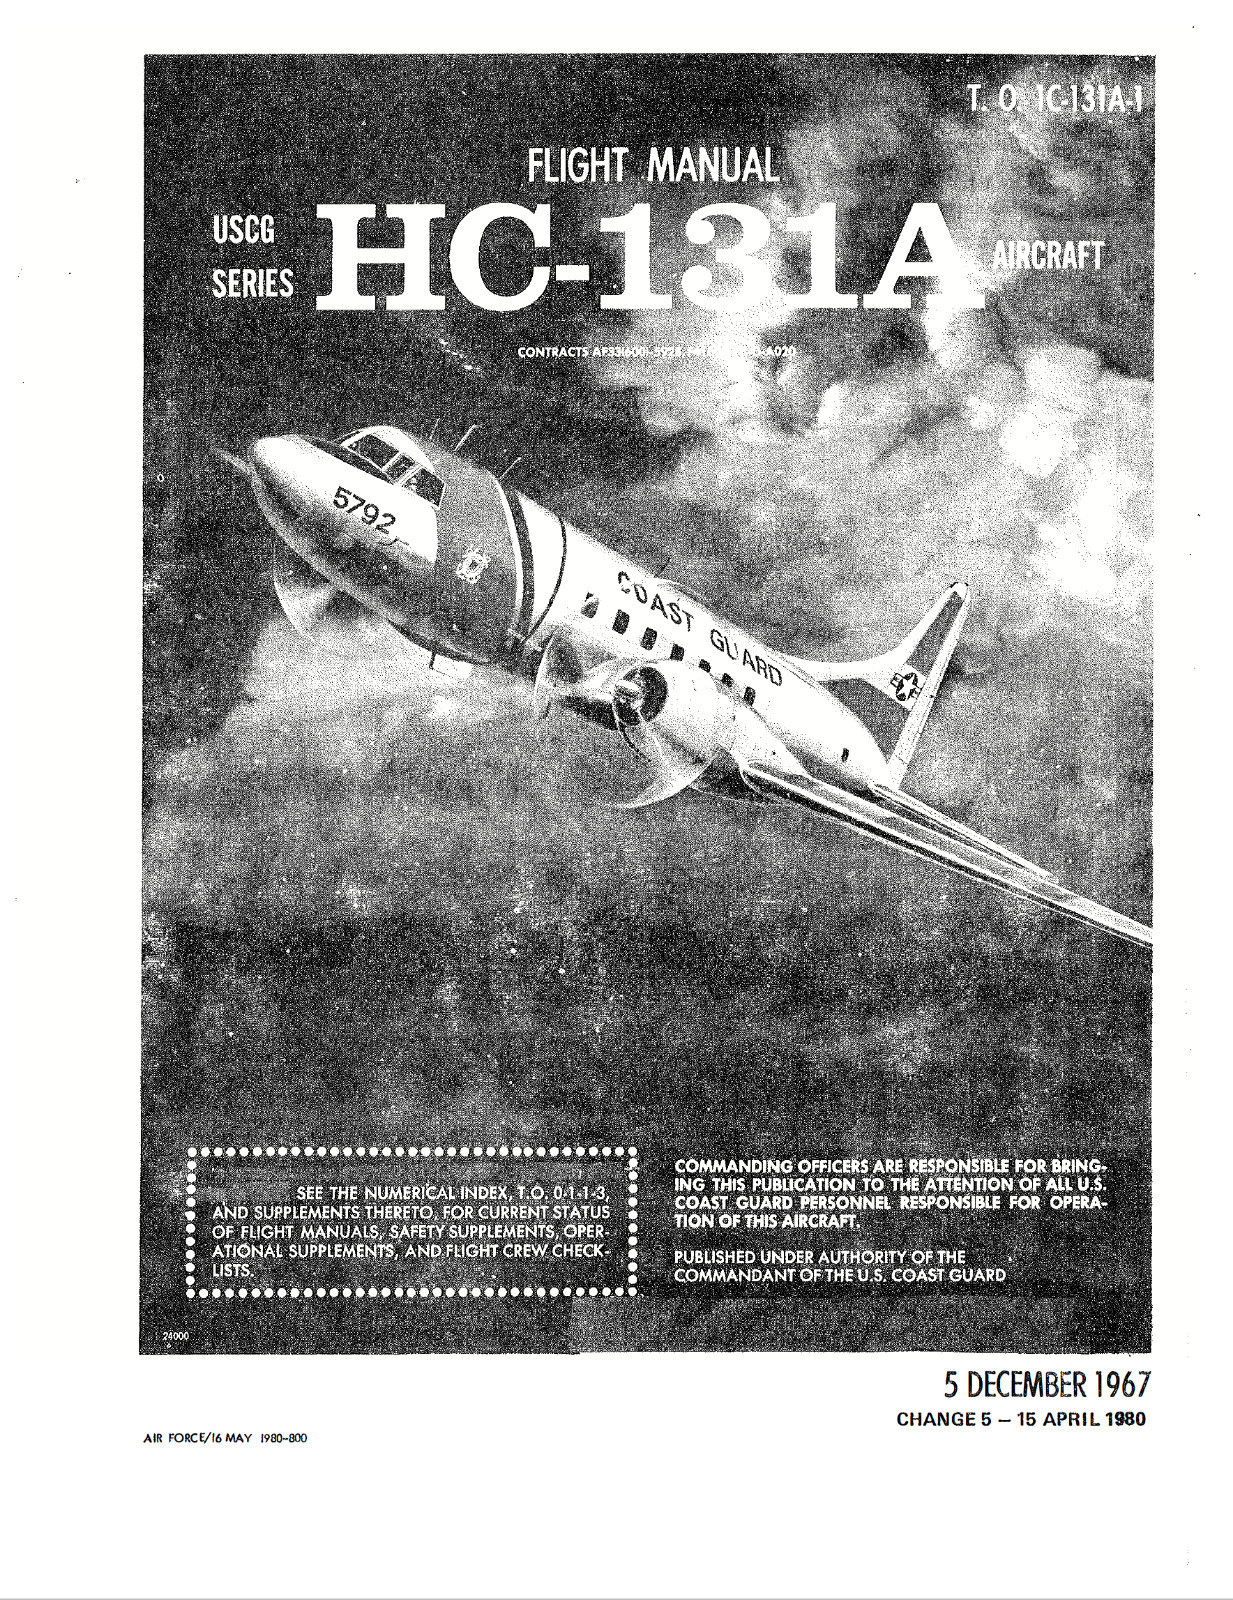 581 Page 1967-80 USCG Convair HC-131A Samaritan TO 1C-131A-1 Flight Manual on CD